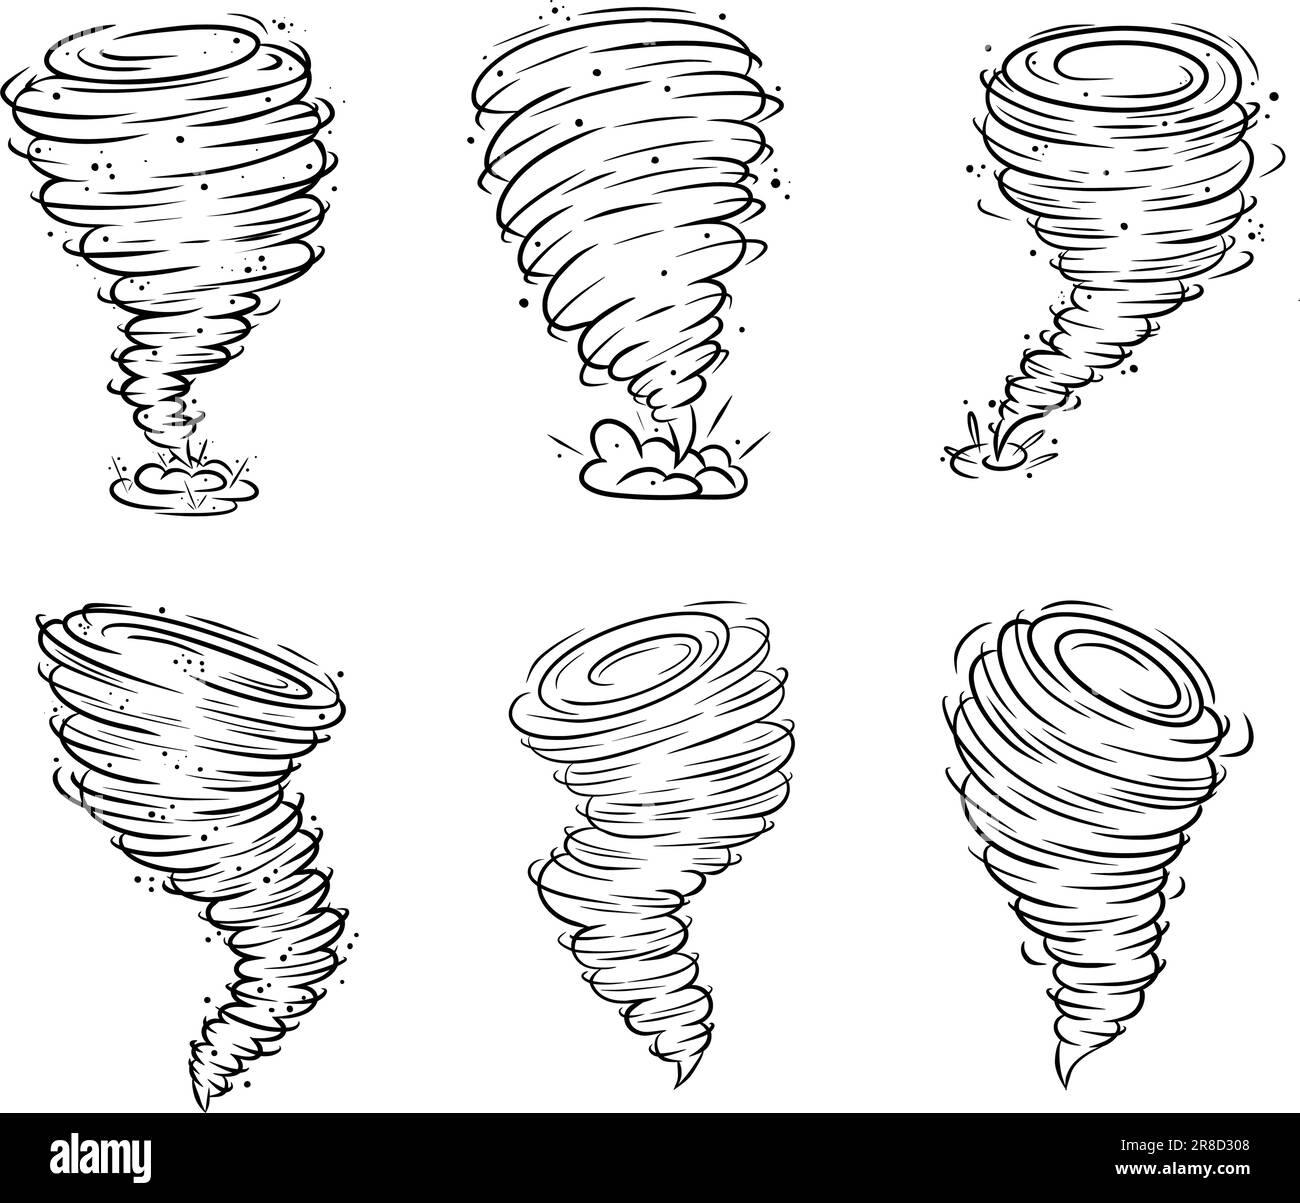 Tornado whirlwind vector icon set. Storm hurricane silhouette illustration. Swirl air cyclone weather spiral symbol. Nature disaster black line vortex Stock Vector